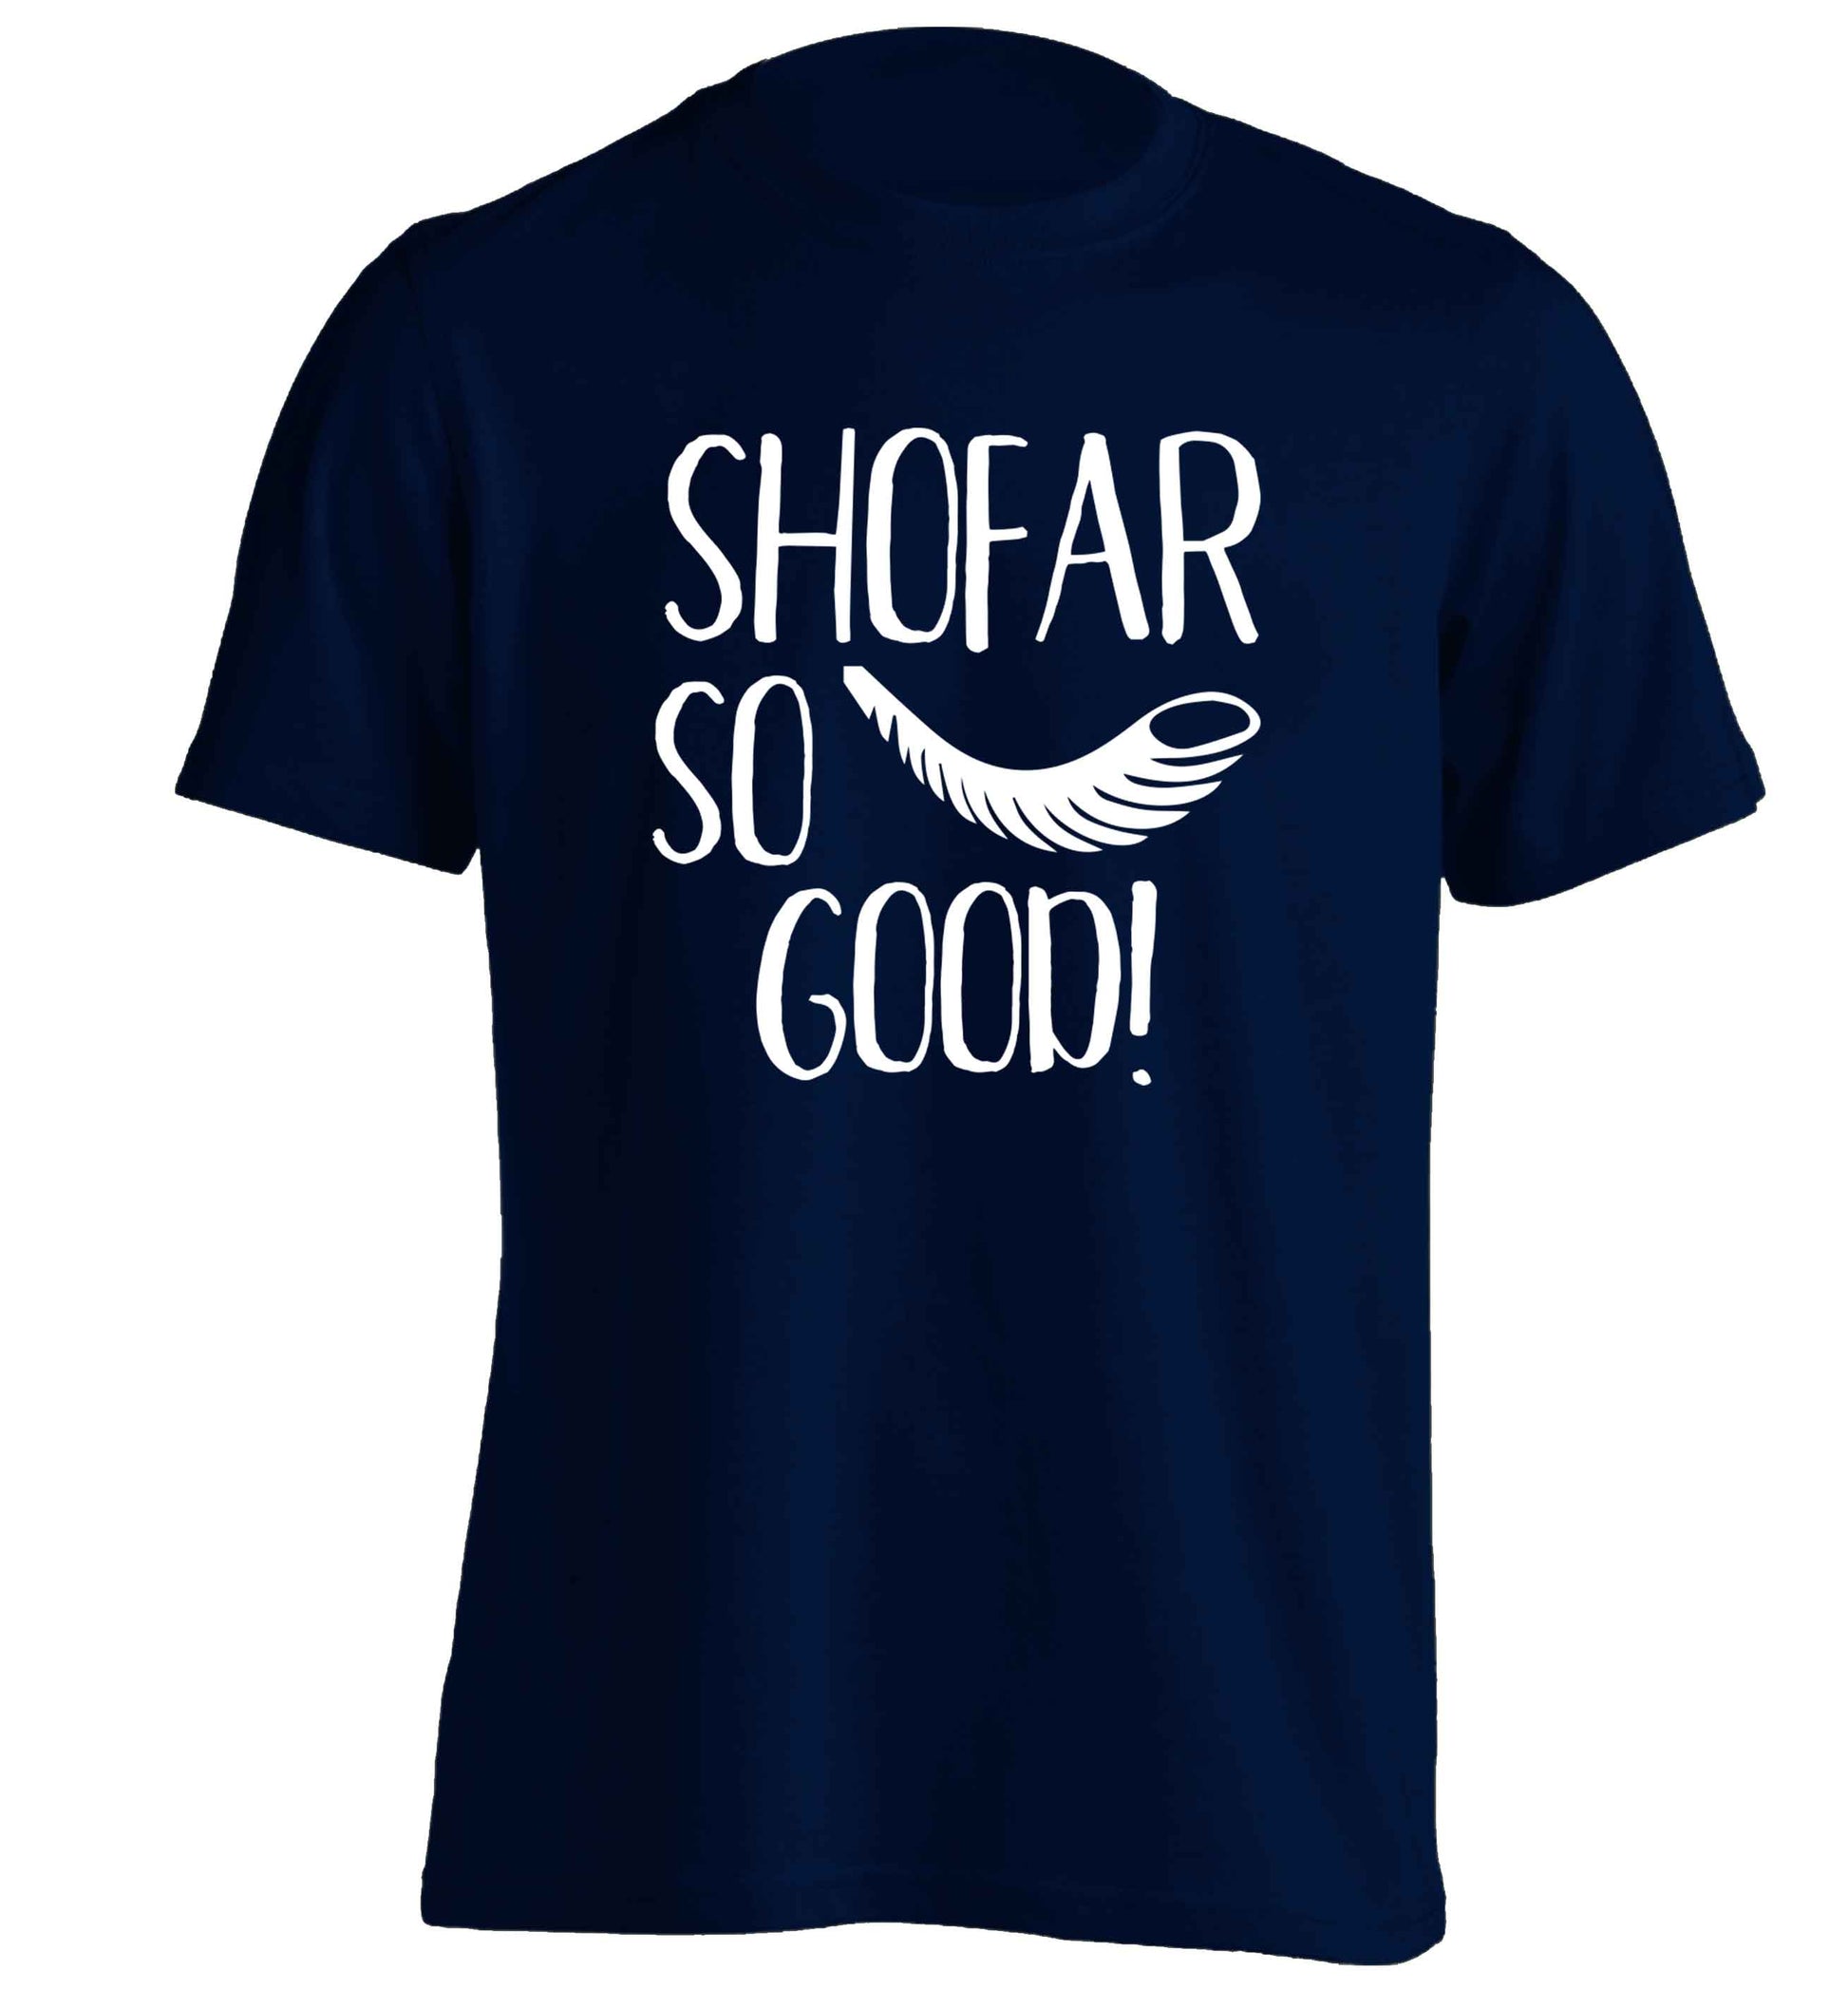 Shofar so good! adults unisex navy Tshirt 2XL